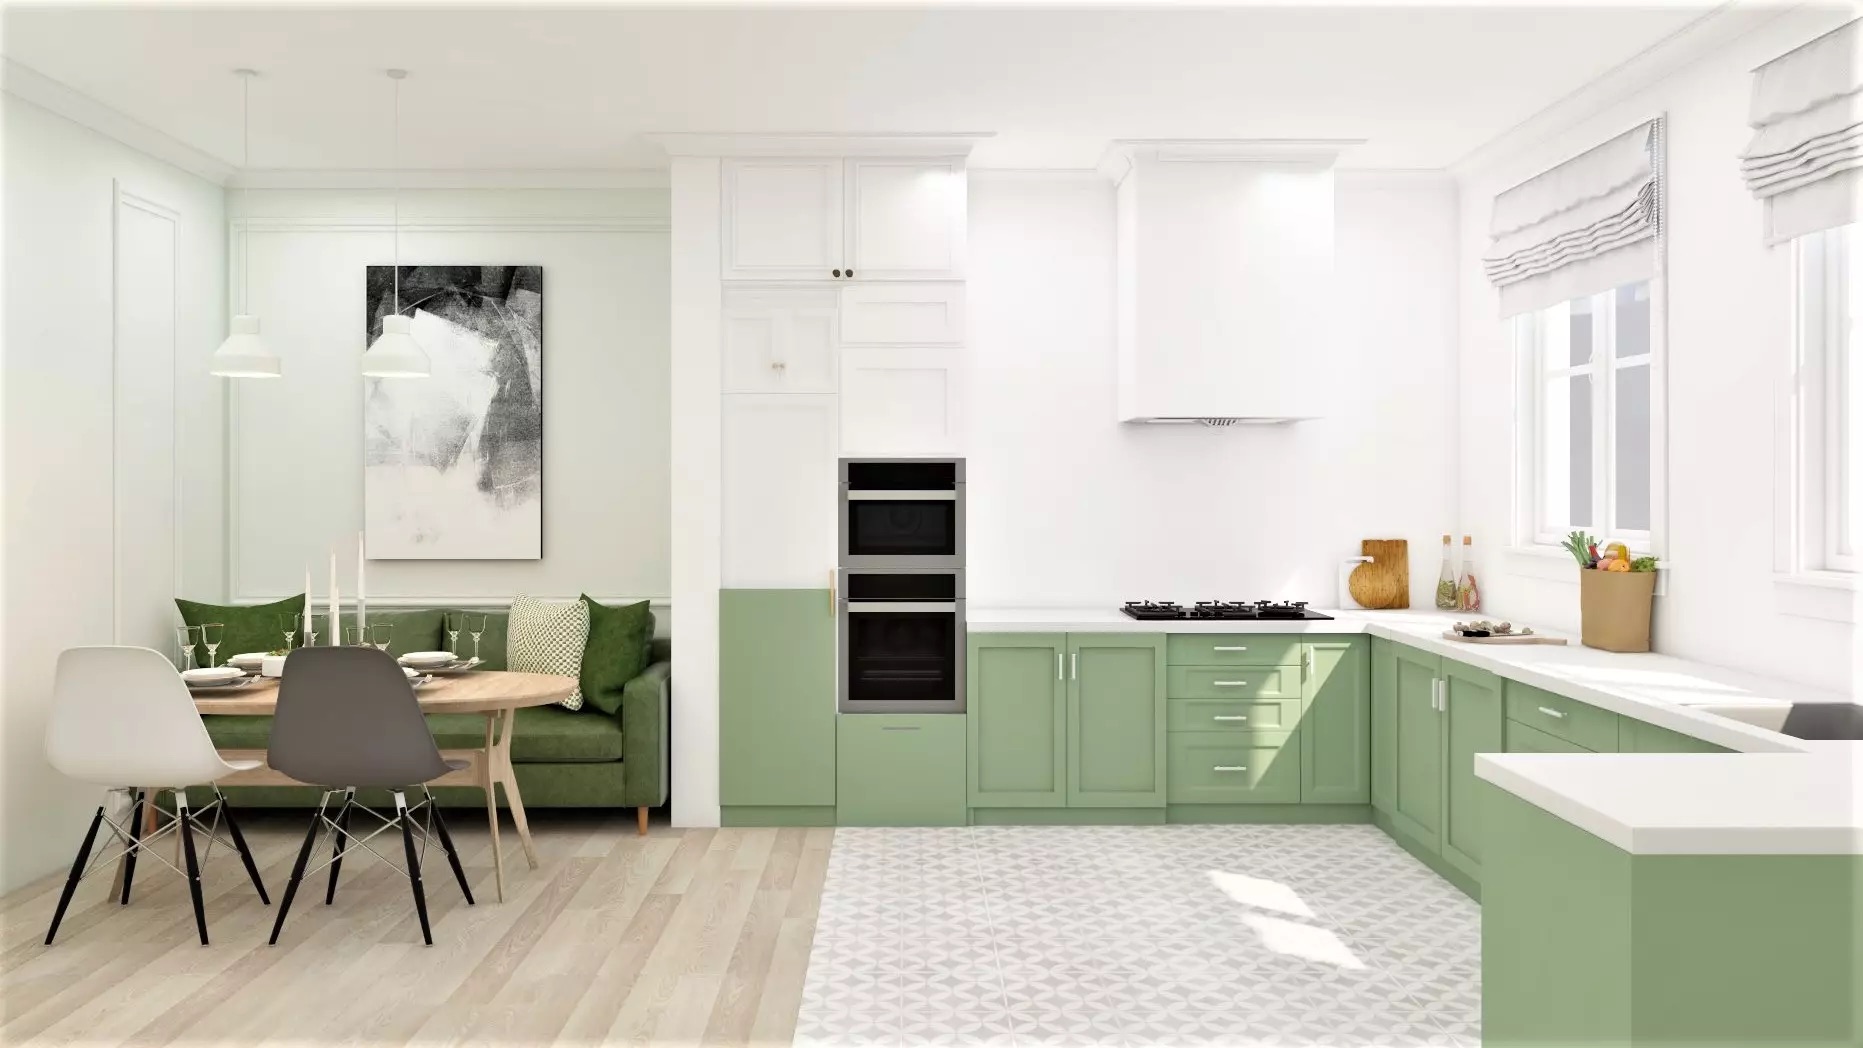 How An Expert Interior Designer Plans A Kitchen: My Top Tips